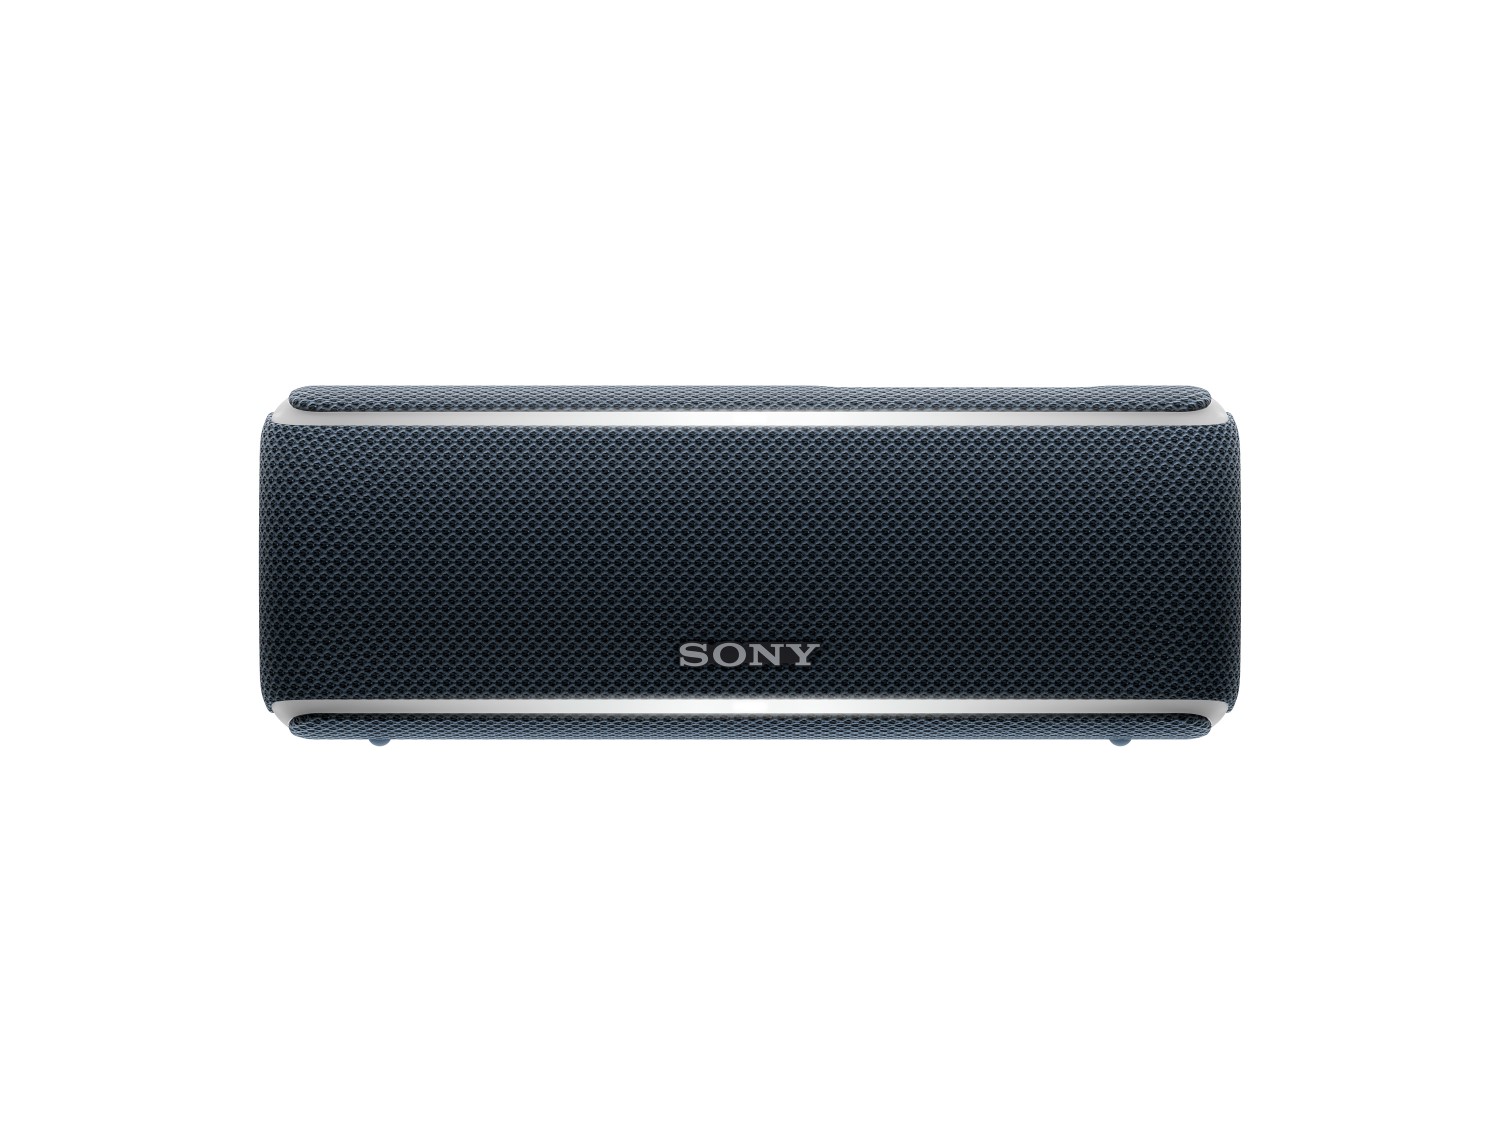 Sony SRS-XB21 Super Bass Portable Party Speaker Black